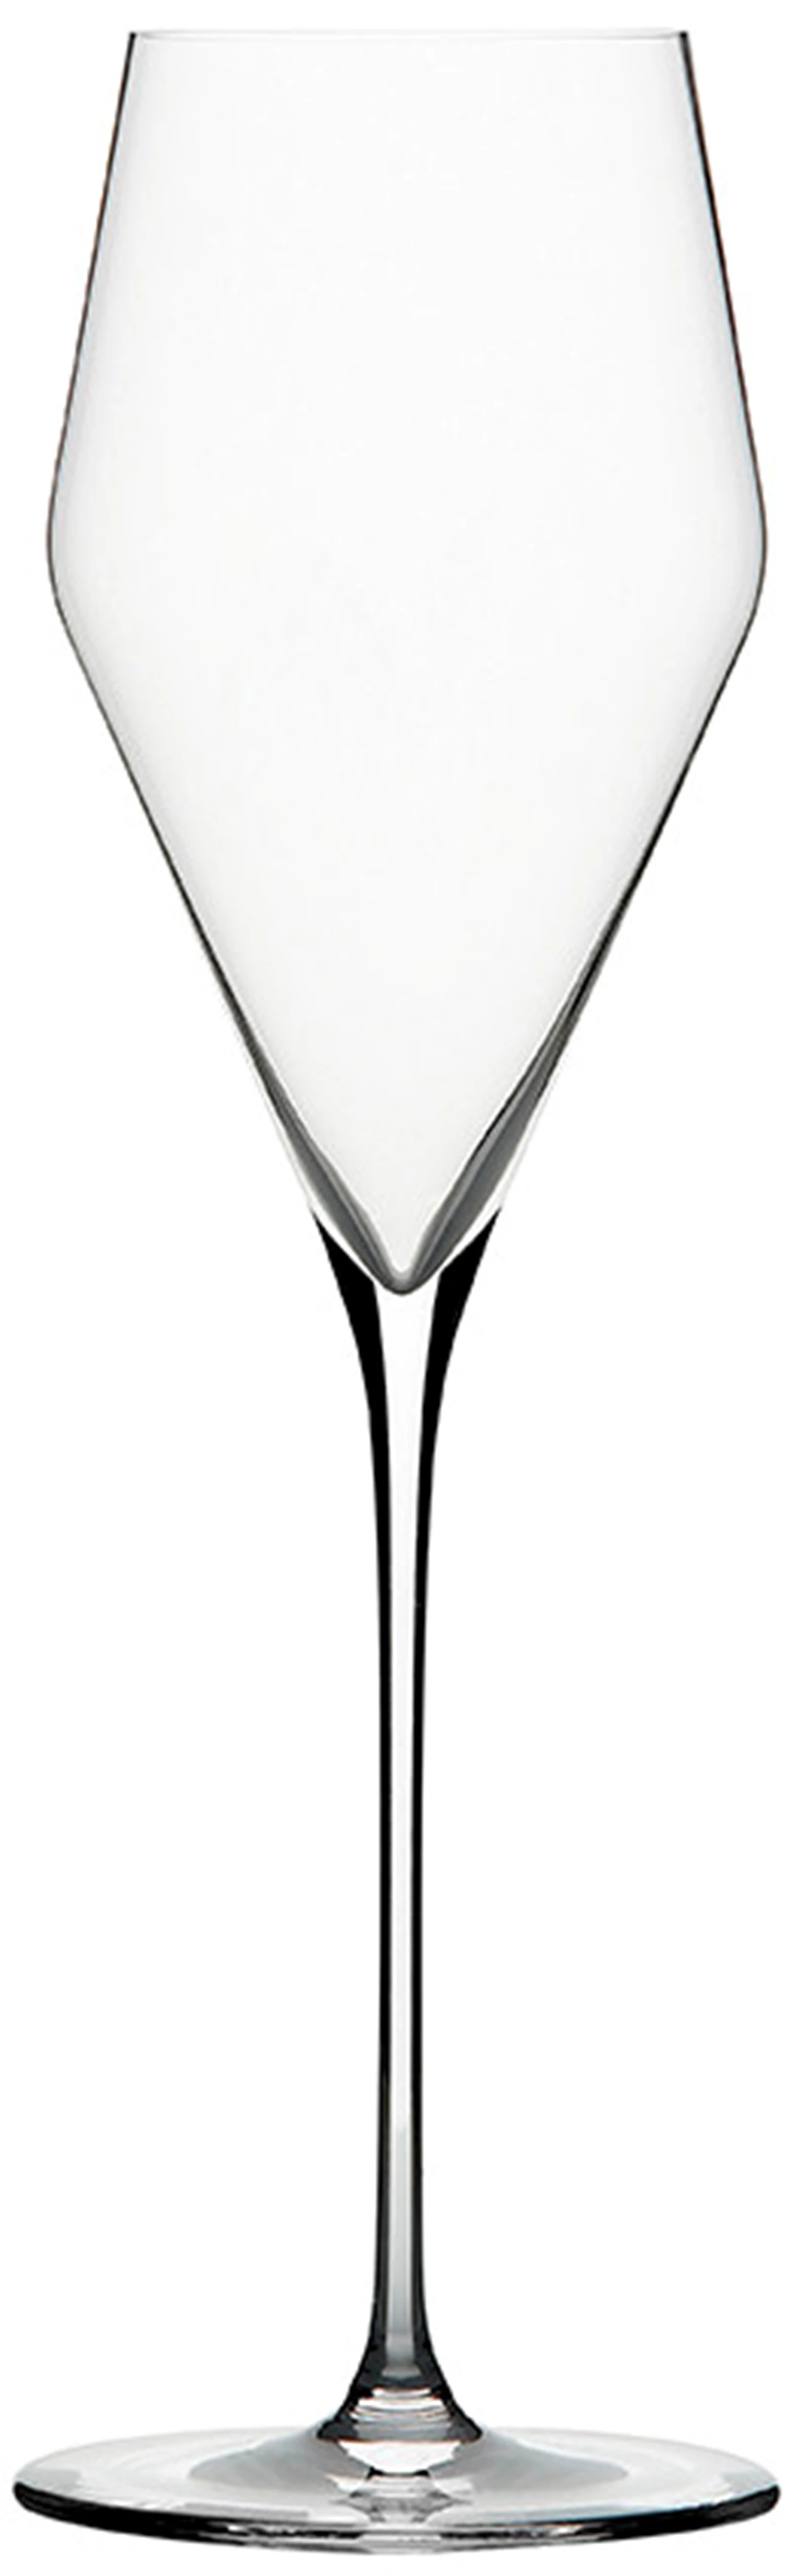 Løgismose Grej Zalto Glasperfektion Champagneglas 2 stk - 133391